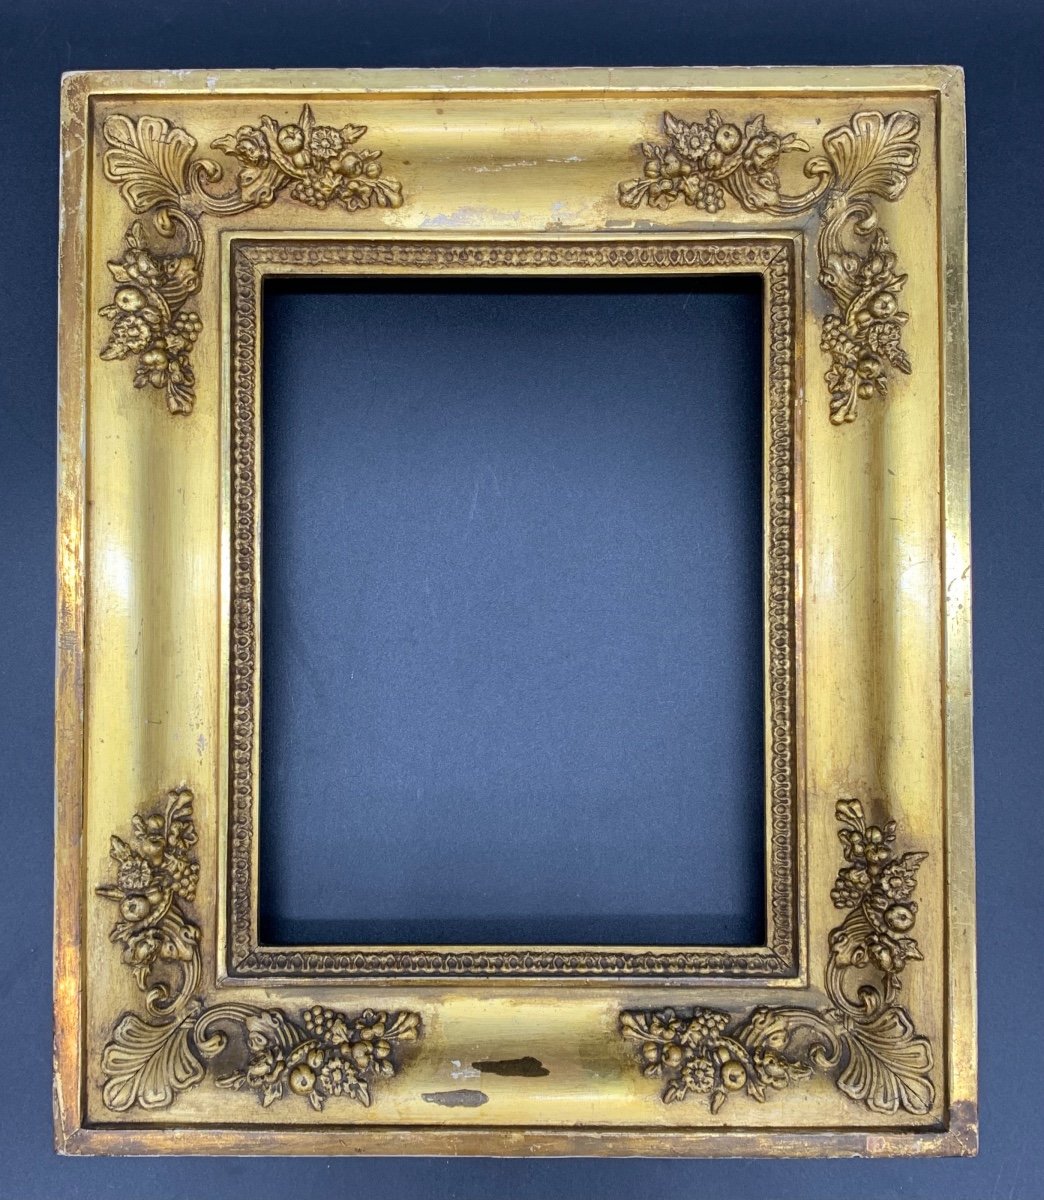 Empire Frame In Golden Wood - XIX Century